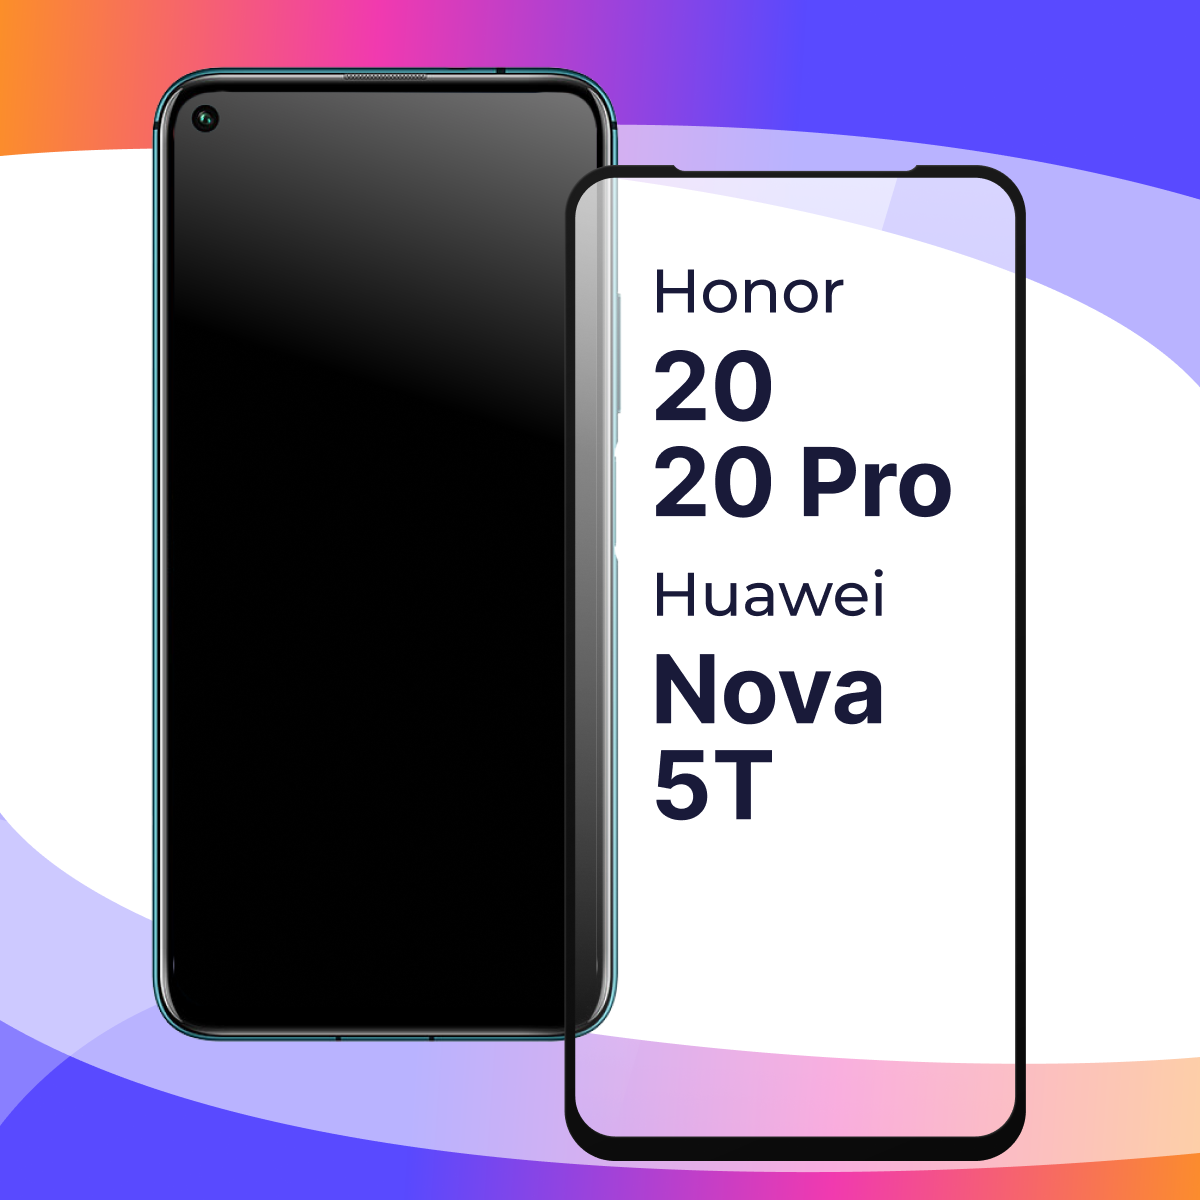 Комплект 2 шт. Защитное стекло для телефона Honor 20 20 Pro Huawei Nova 5T / Противоударное стекло на Хонор 20 20 Про и Хуавей Нова 5Т / Прозрачное